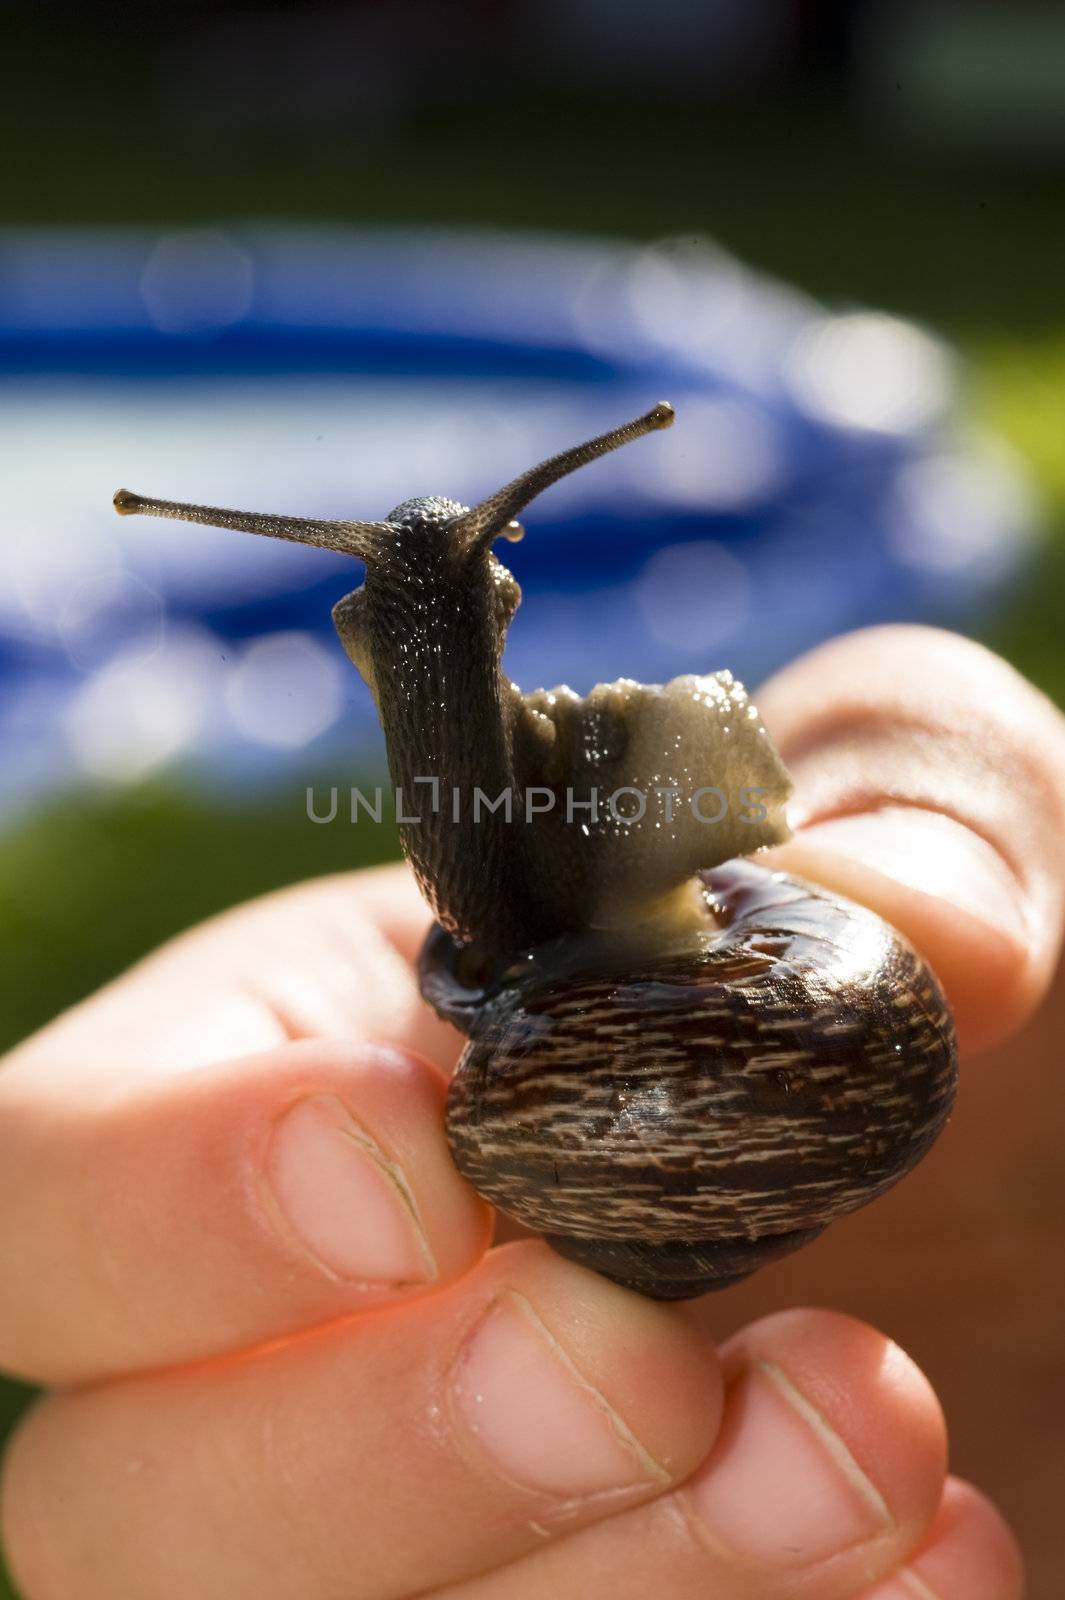 Snail by Alenmax